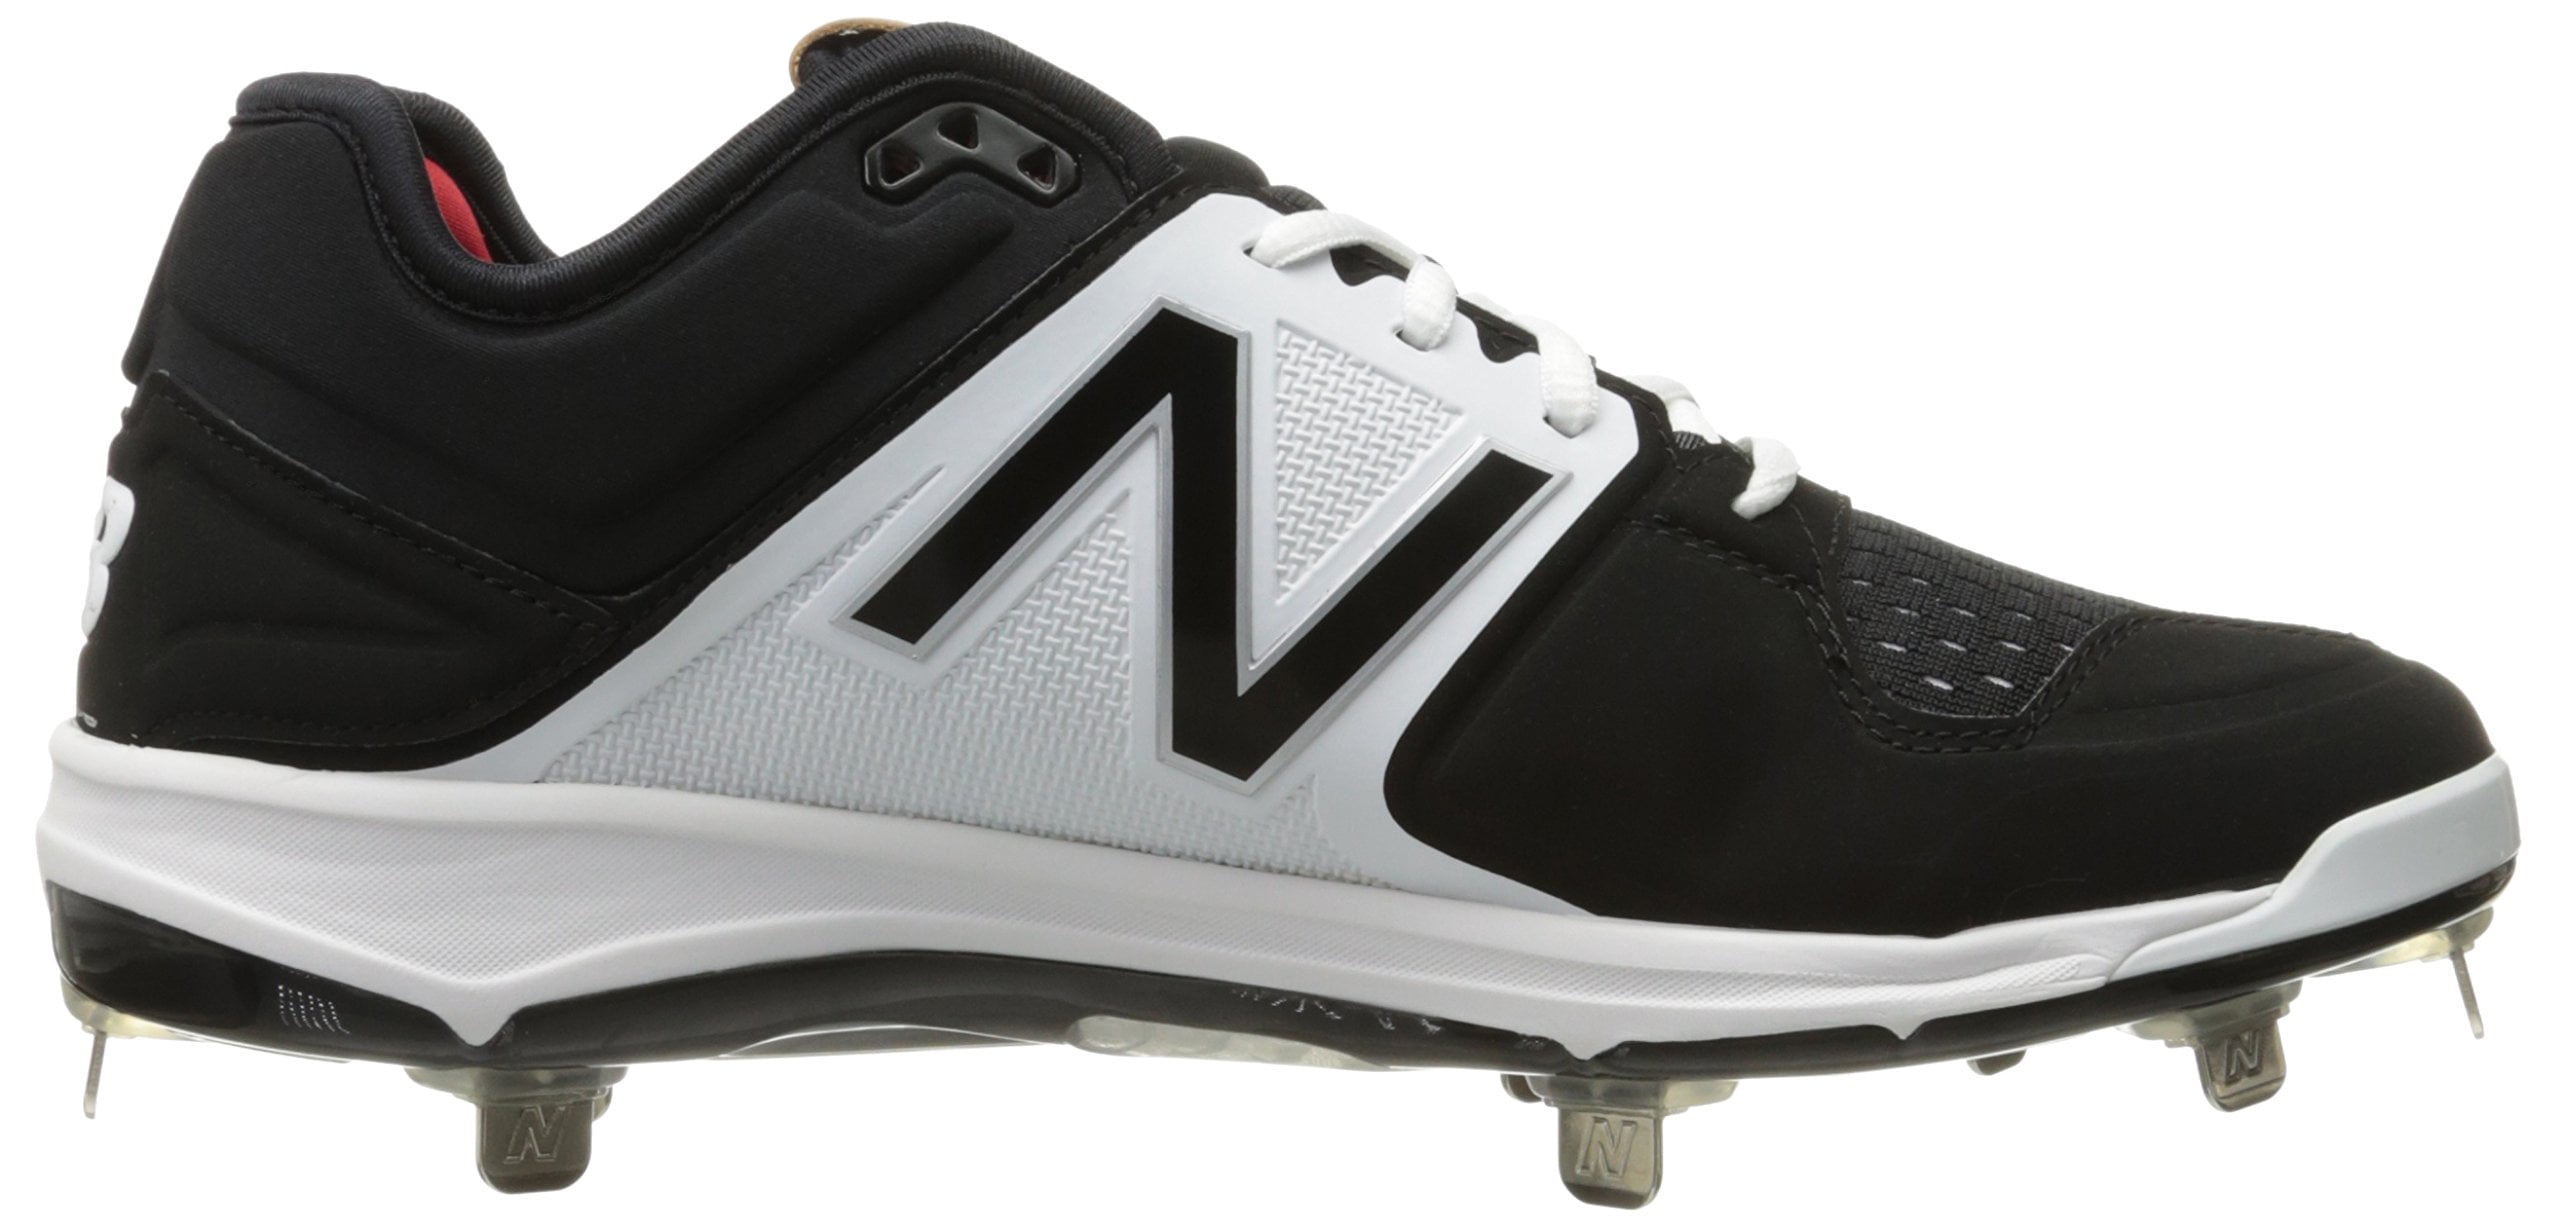 men's l3000v3 metal baseball shoe